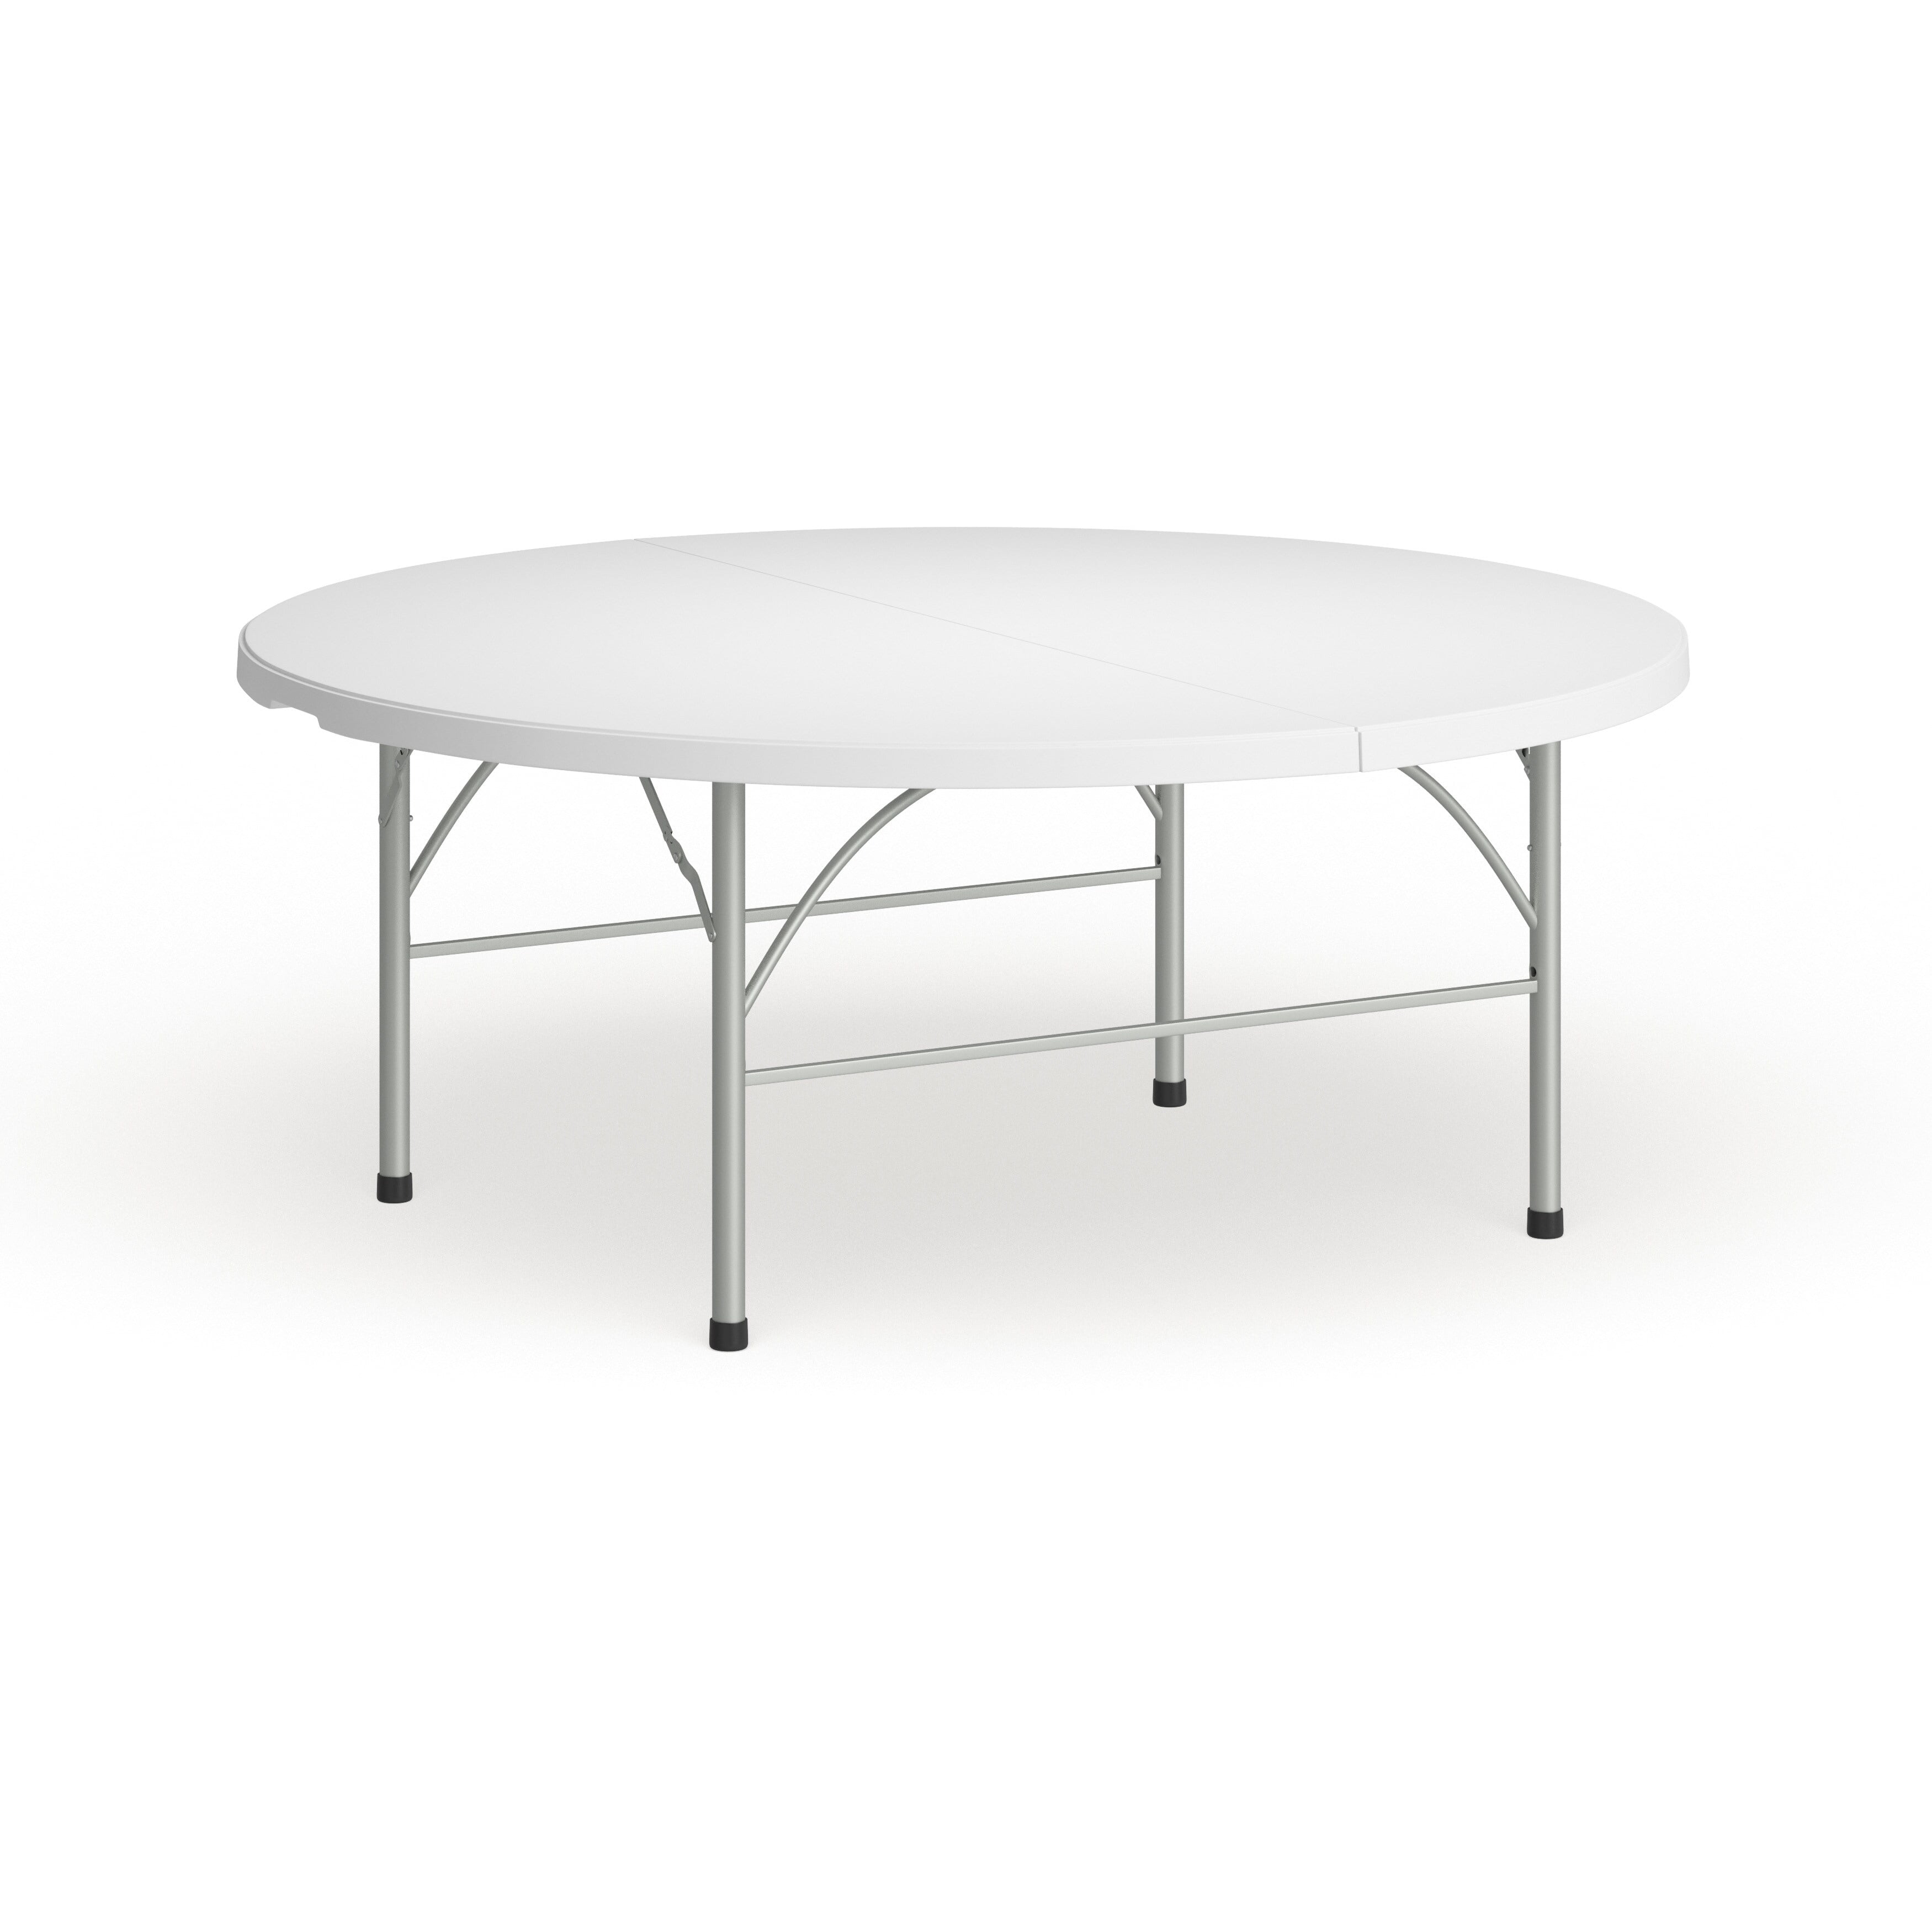 Lifetime 72 Round Folding Table, Lifetime Round Folding Tables 72cm Wide